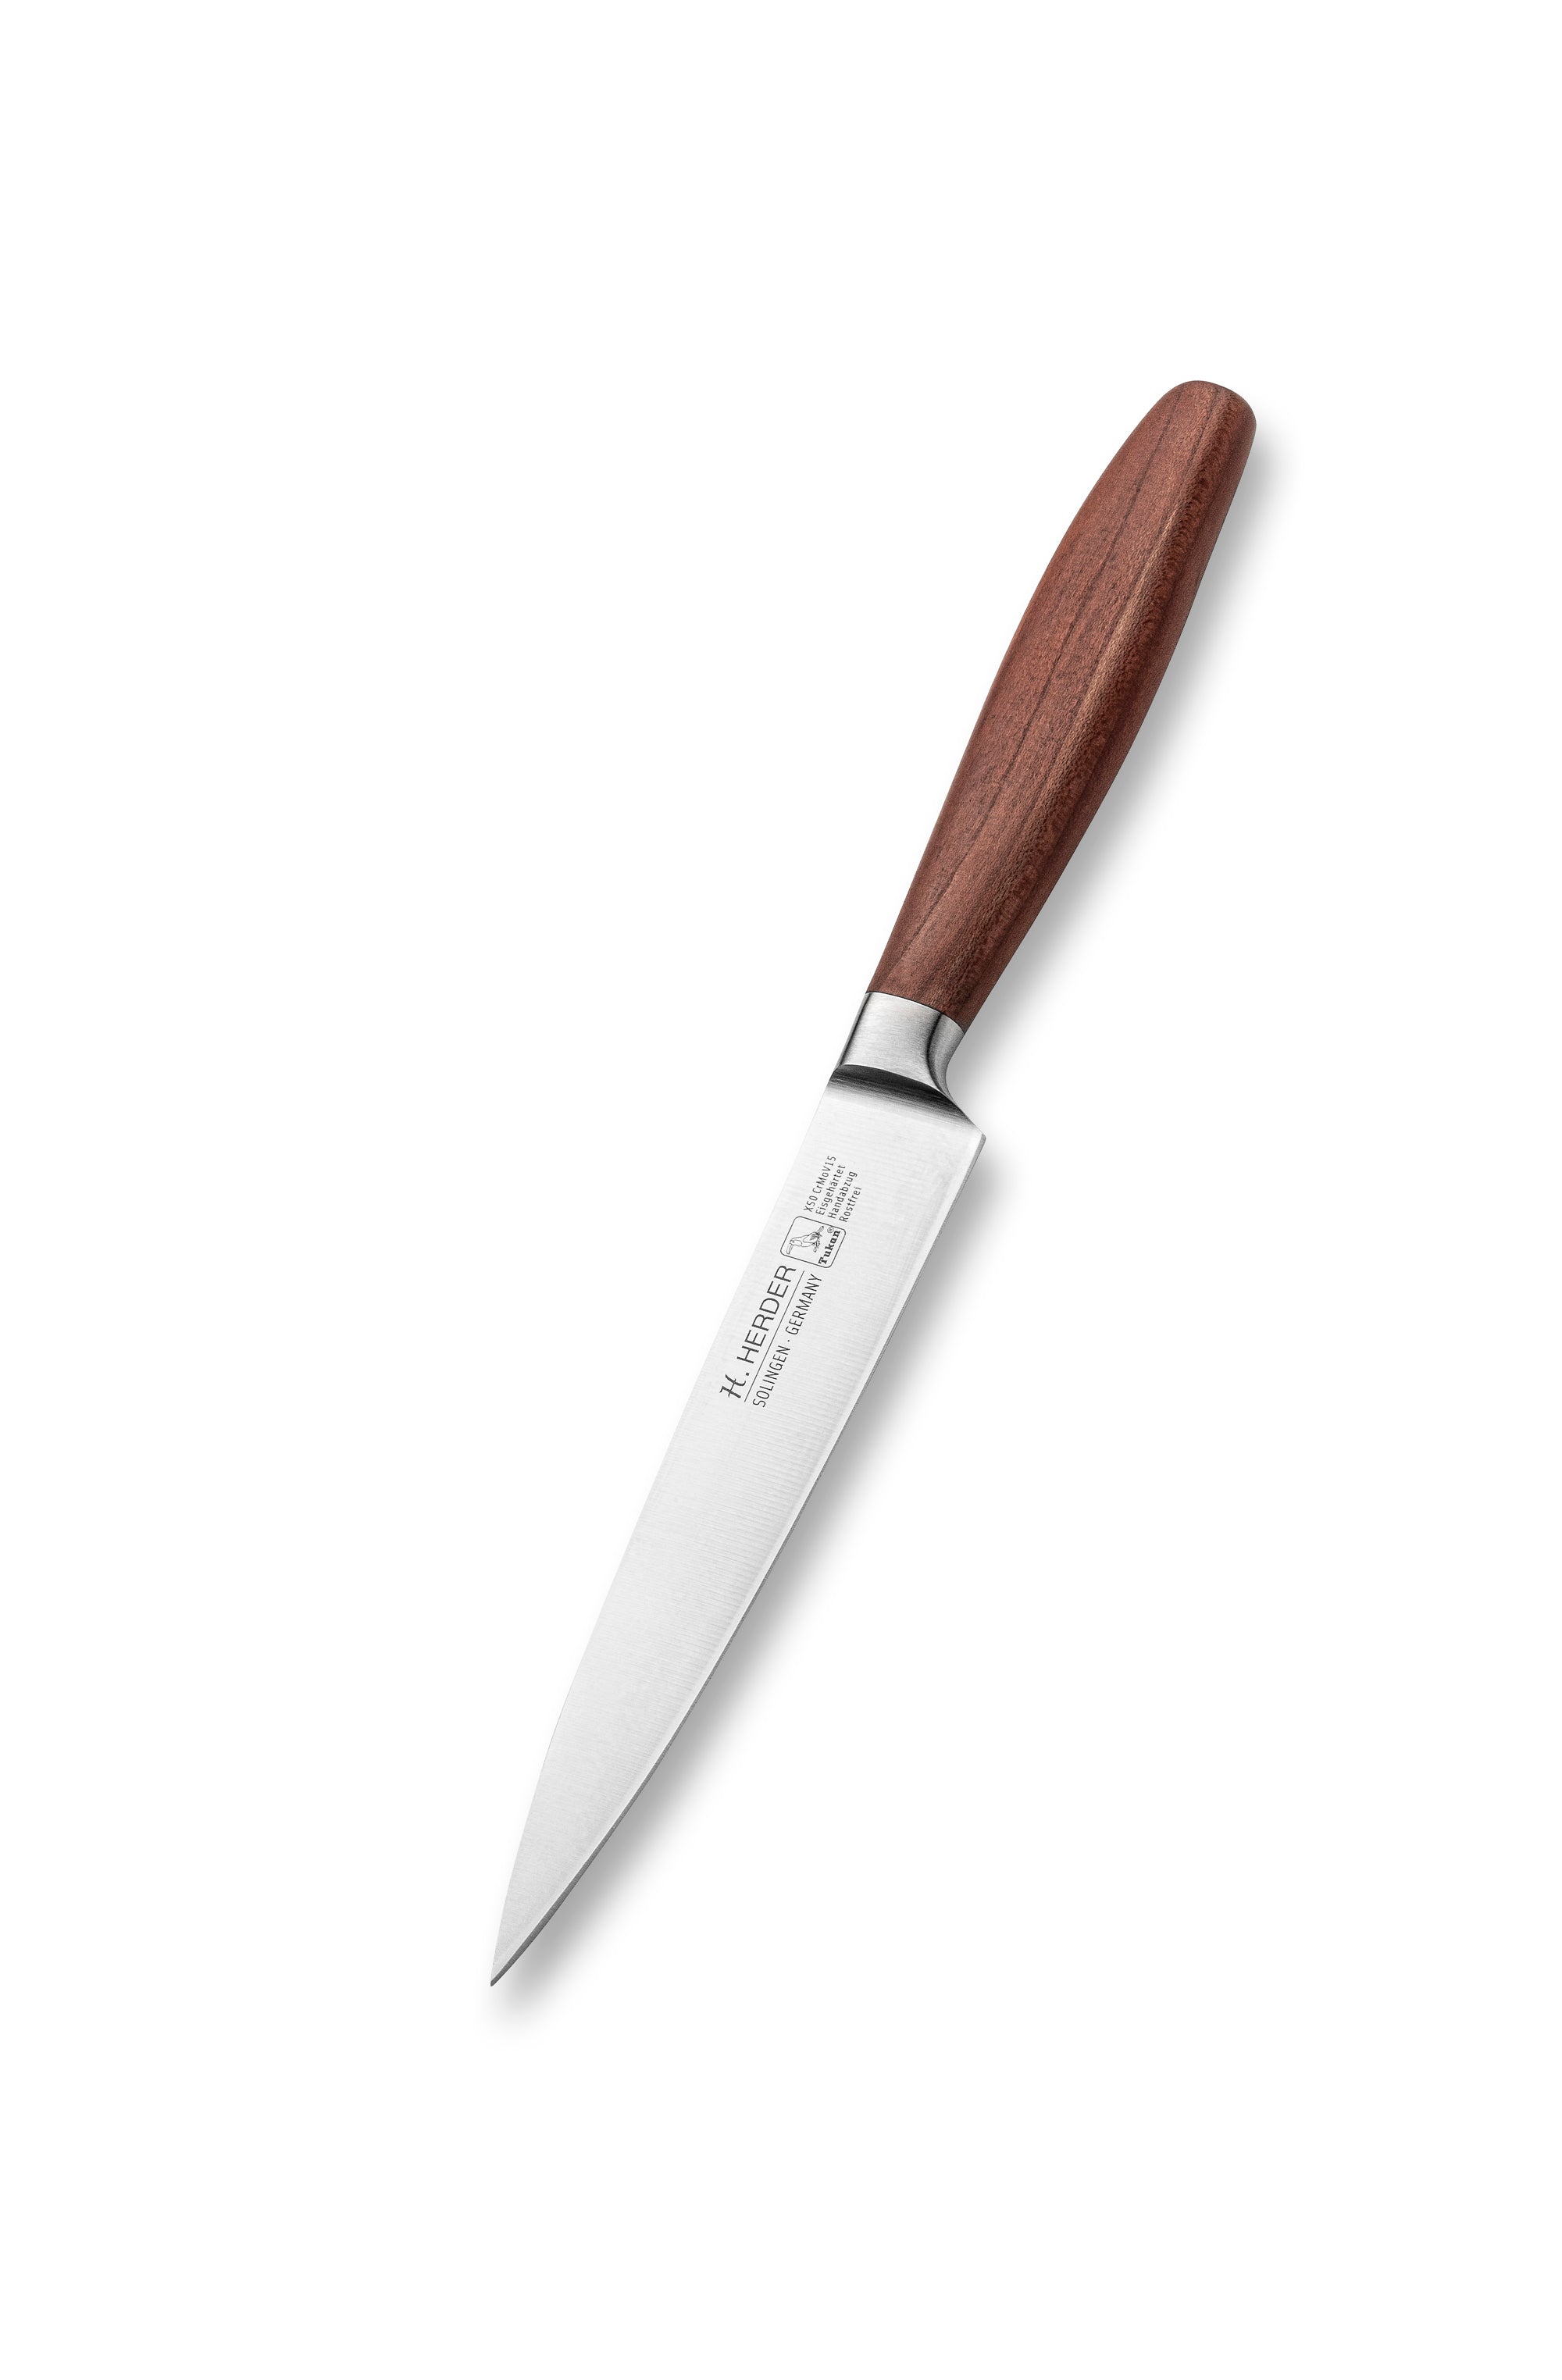 Ham knife Eterno, plum wood, blade length 16cm, forged